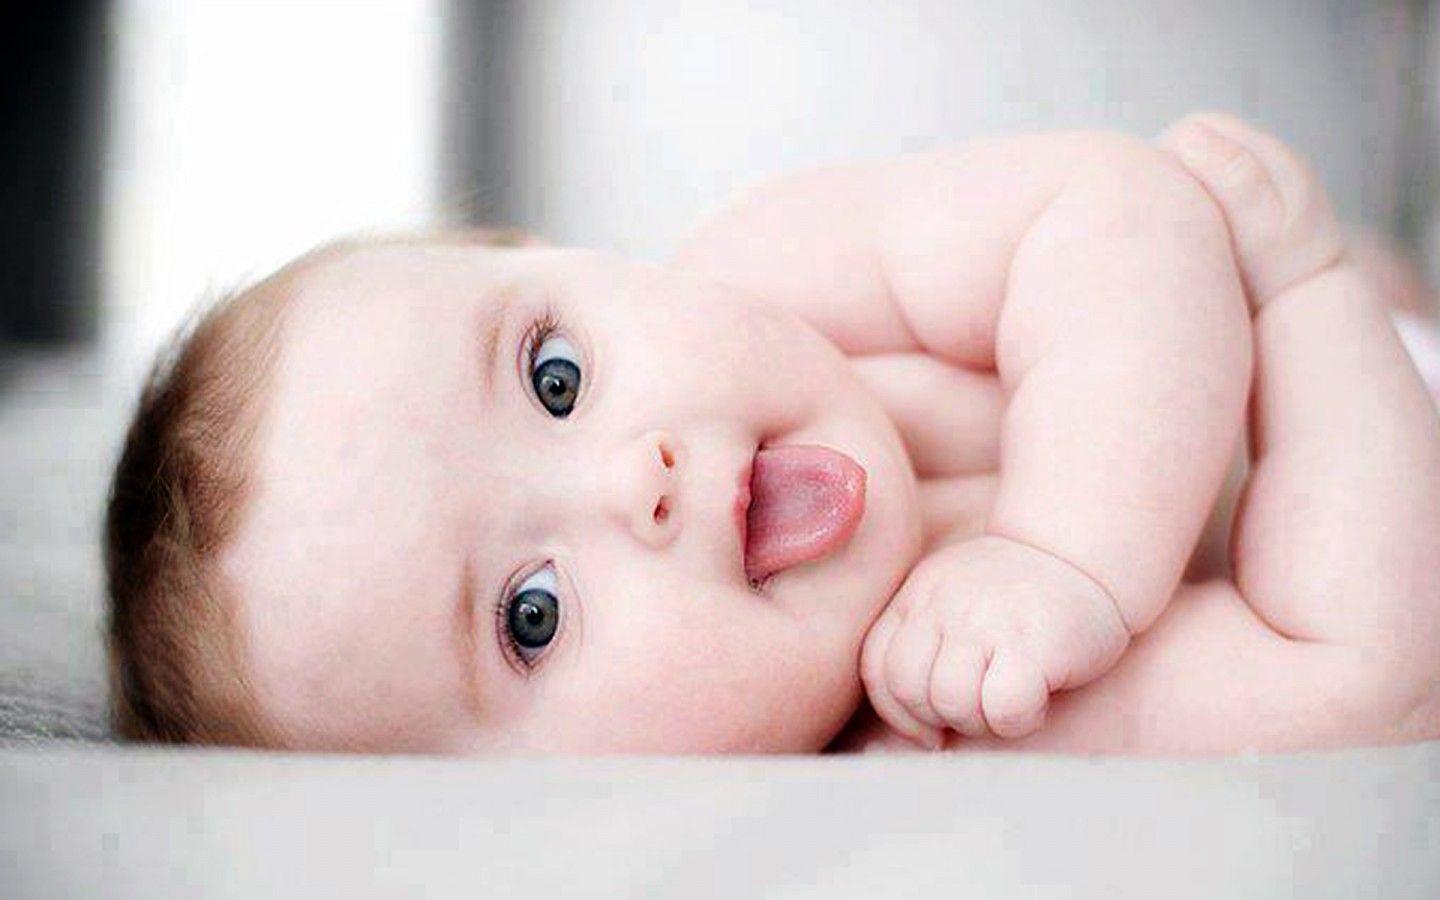 Cute Babies Desktop Wallpaper Photo. Url 2018 02 Cute Babies Deskto. Cute Baby Wallpaper, Baby Wallpaper Hd, Baby Boy Picture